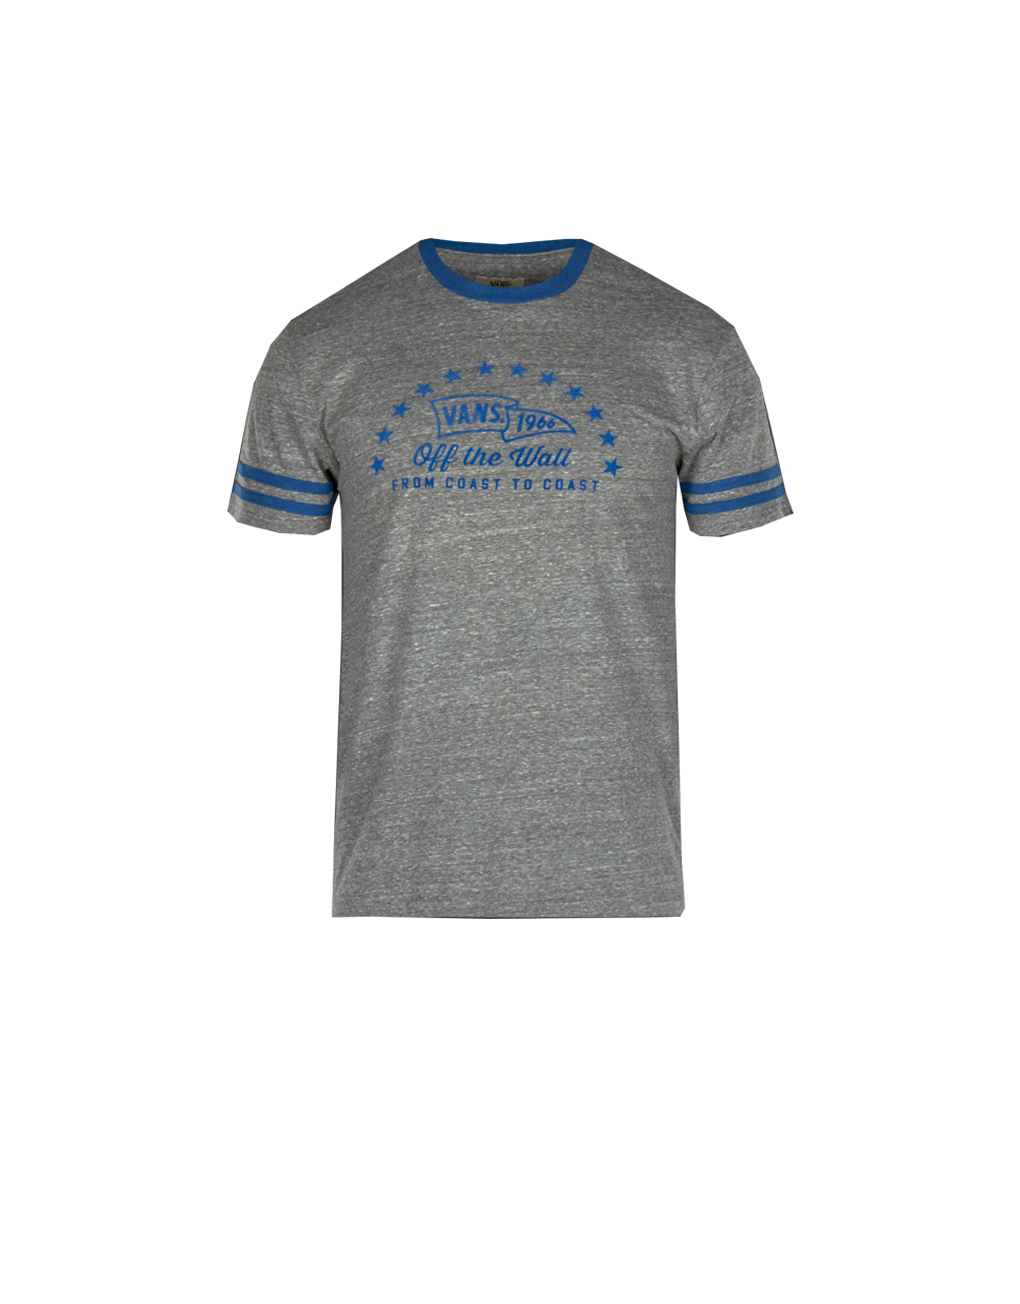 VANS – Flagged ringer t-shirt grey